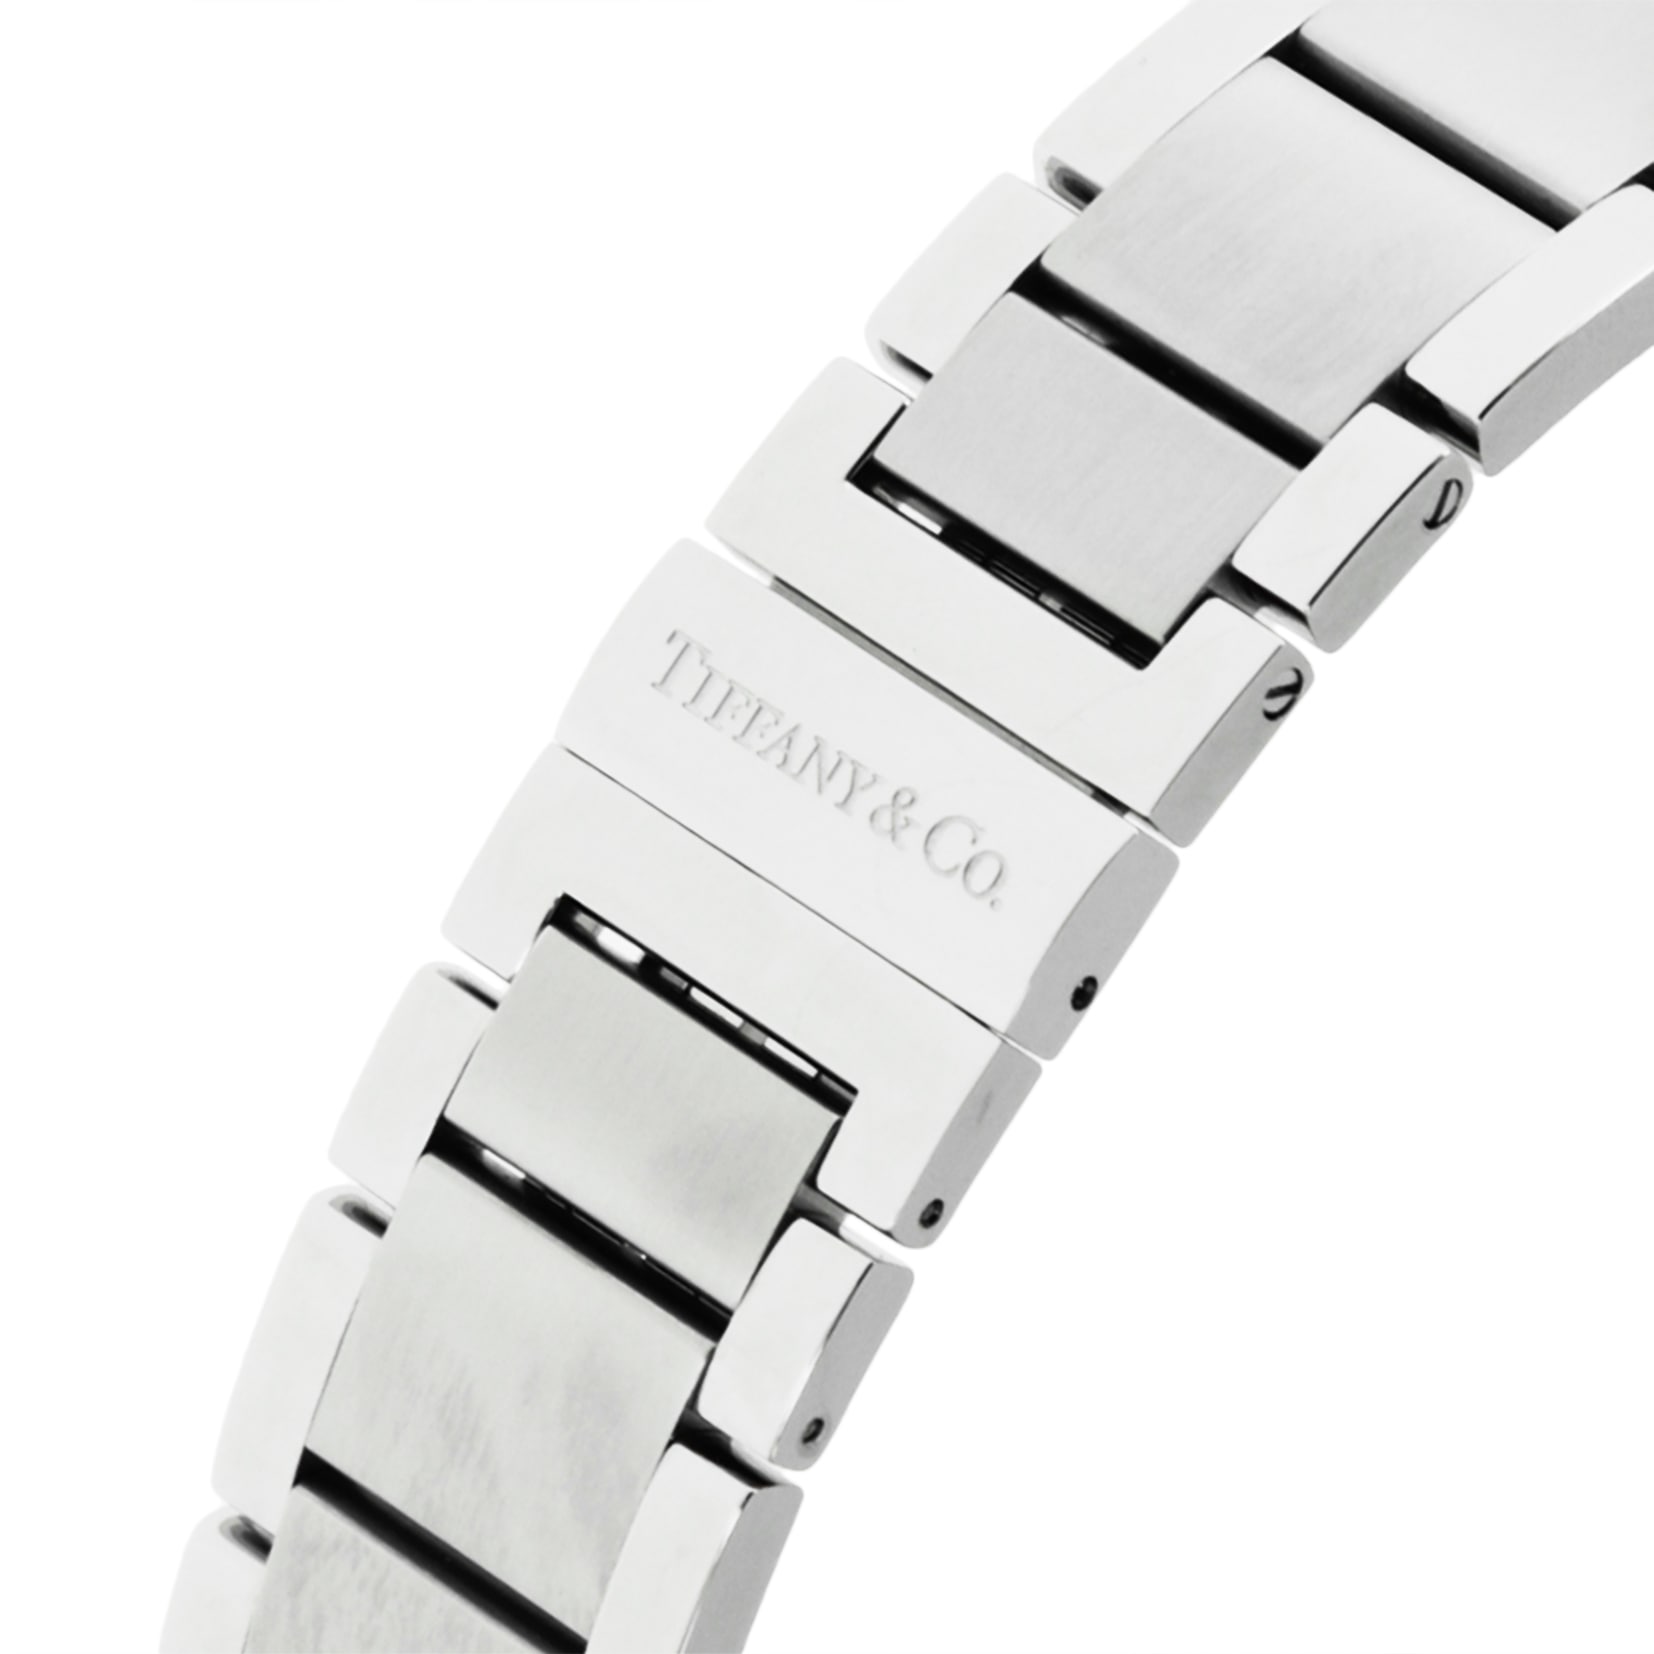 Tiffany&Co. ティファニー 腕時計 AtlasDome シルバー Z1810.68.10A21A00A